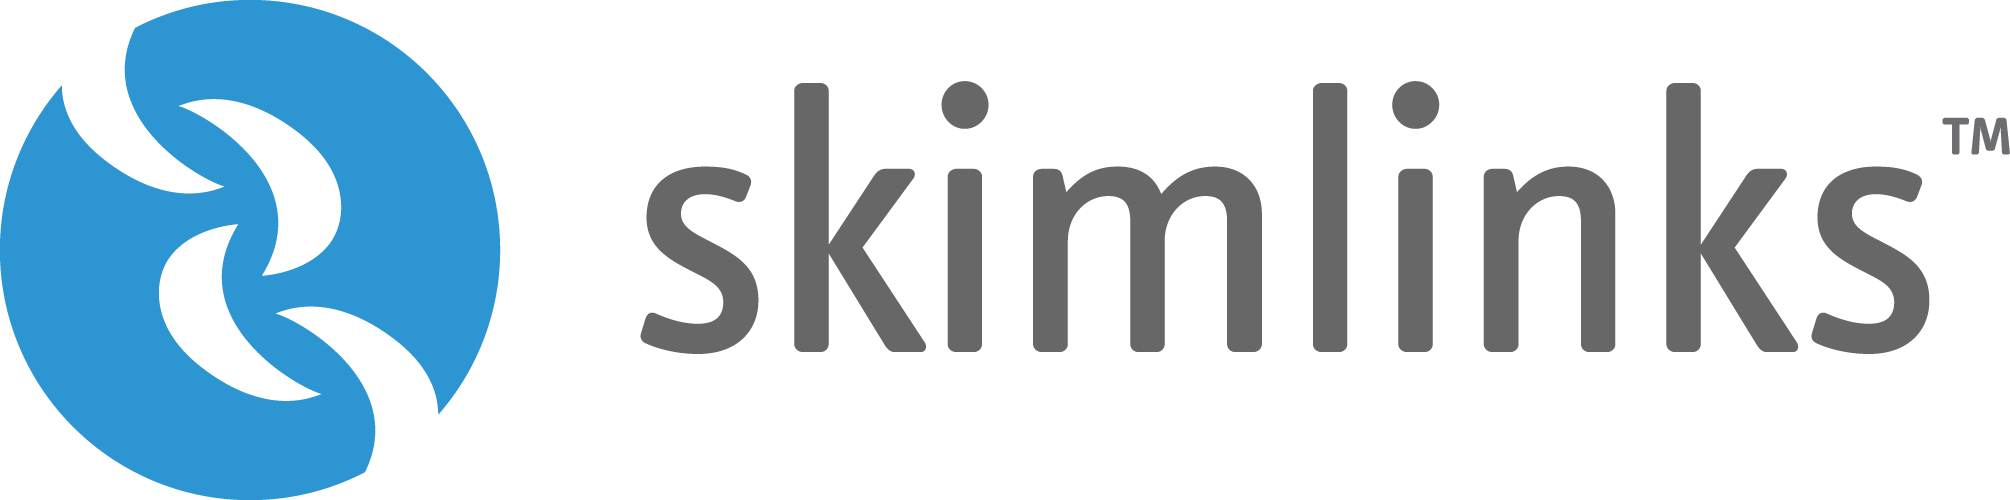 skimlinks-affiliate-platform-logo.jpg